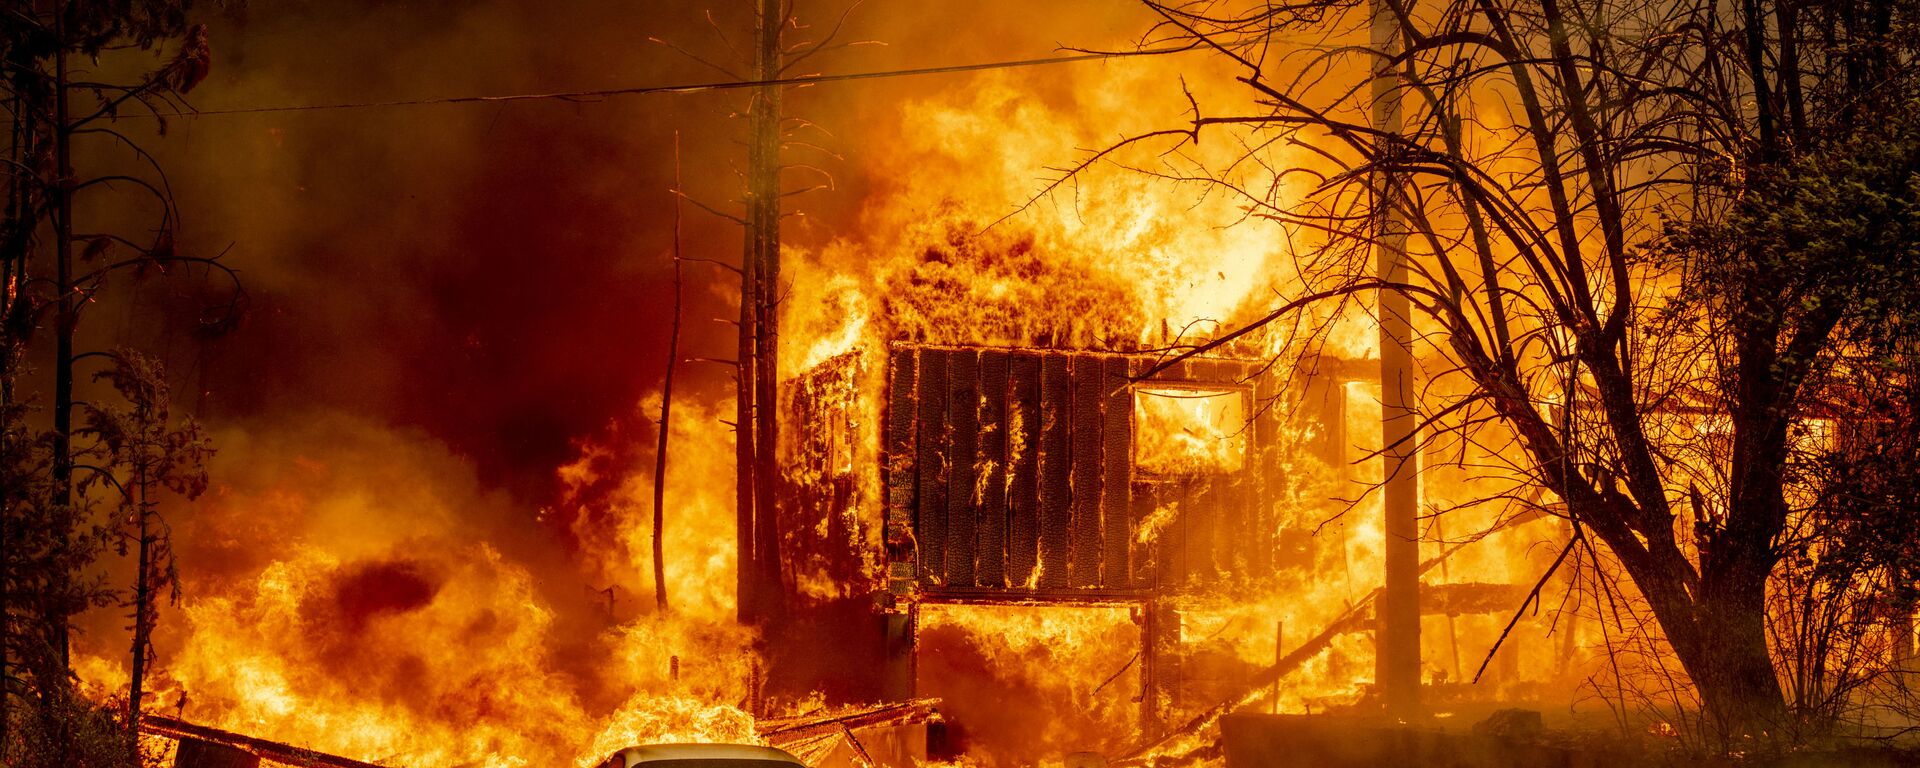 Apocalypse Now: California Suffers From Disastrous Wildfires - Sputnik International, 1920, 07.08.2021